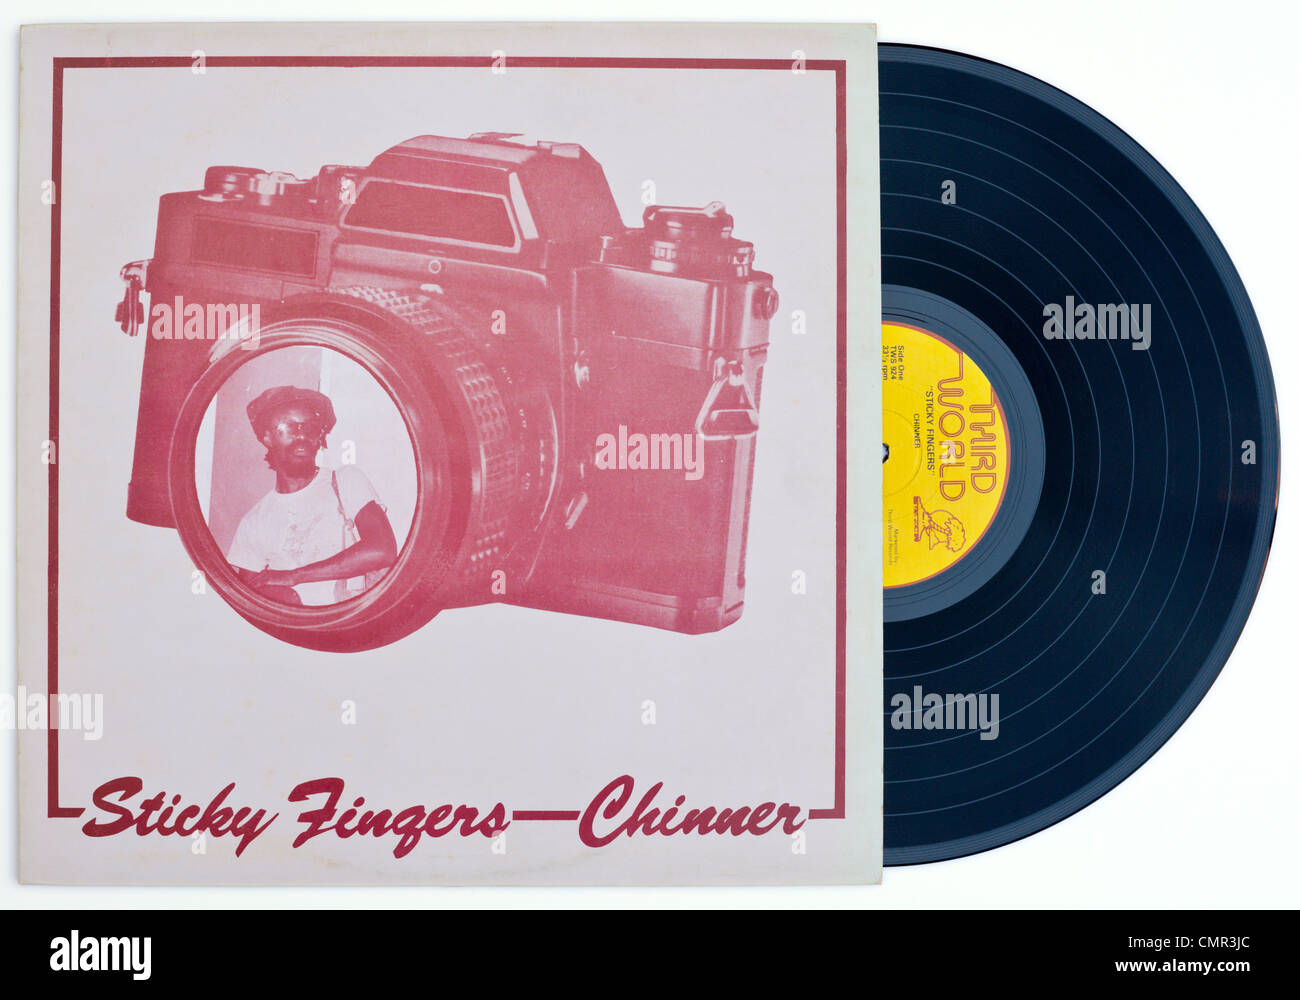 Jamaican dub reggae musician CHINNER aka Earl Smith, Sticky Fingers vinyl album cover released 1977 on Third World record label Stock Photo